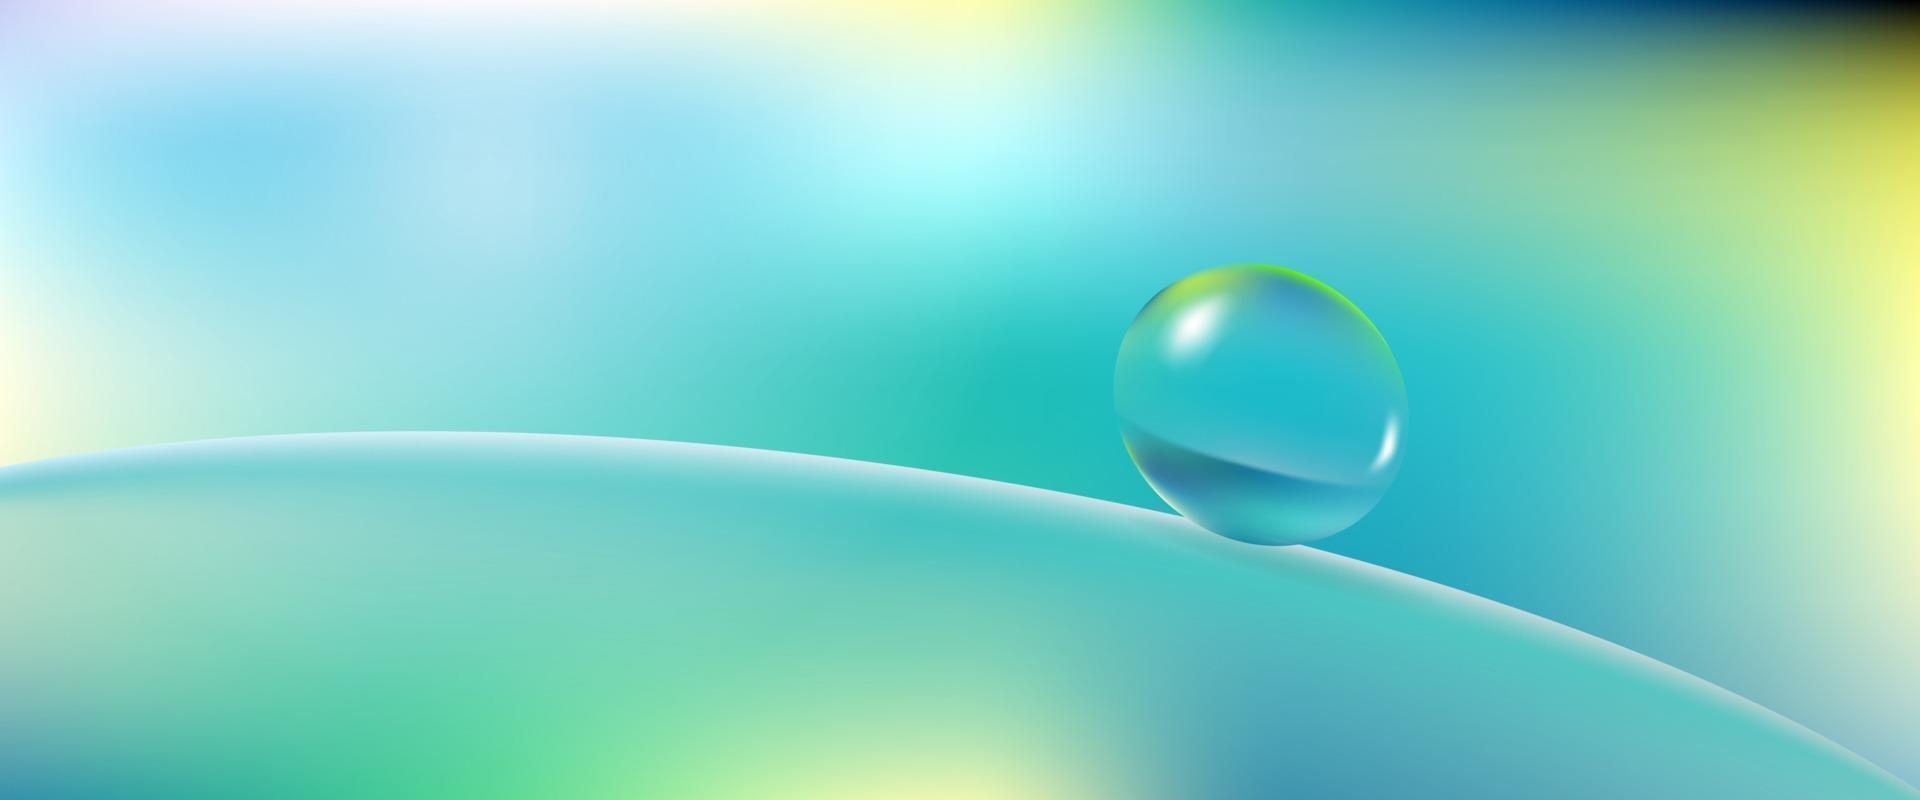 esfera de agua sobre superficie lisa vector